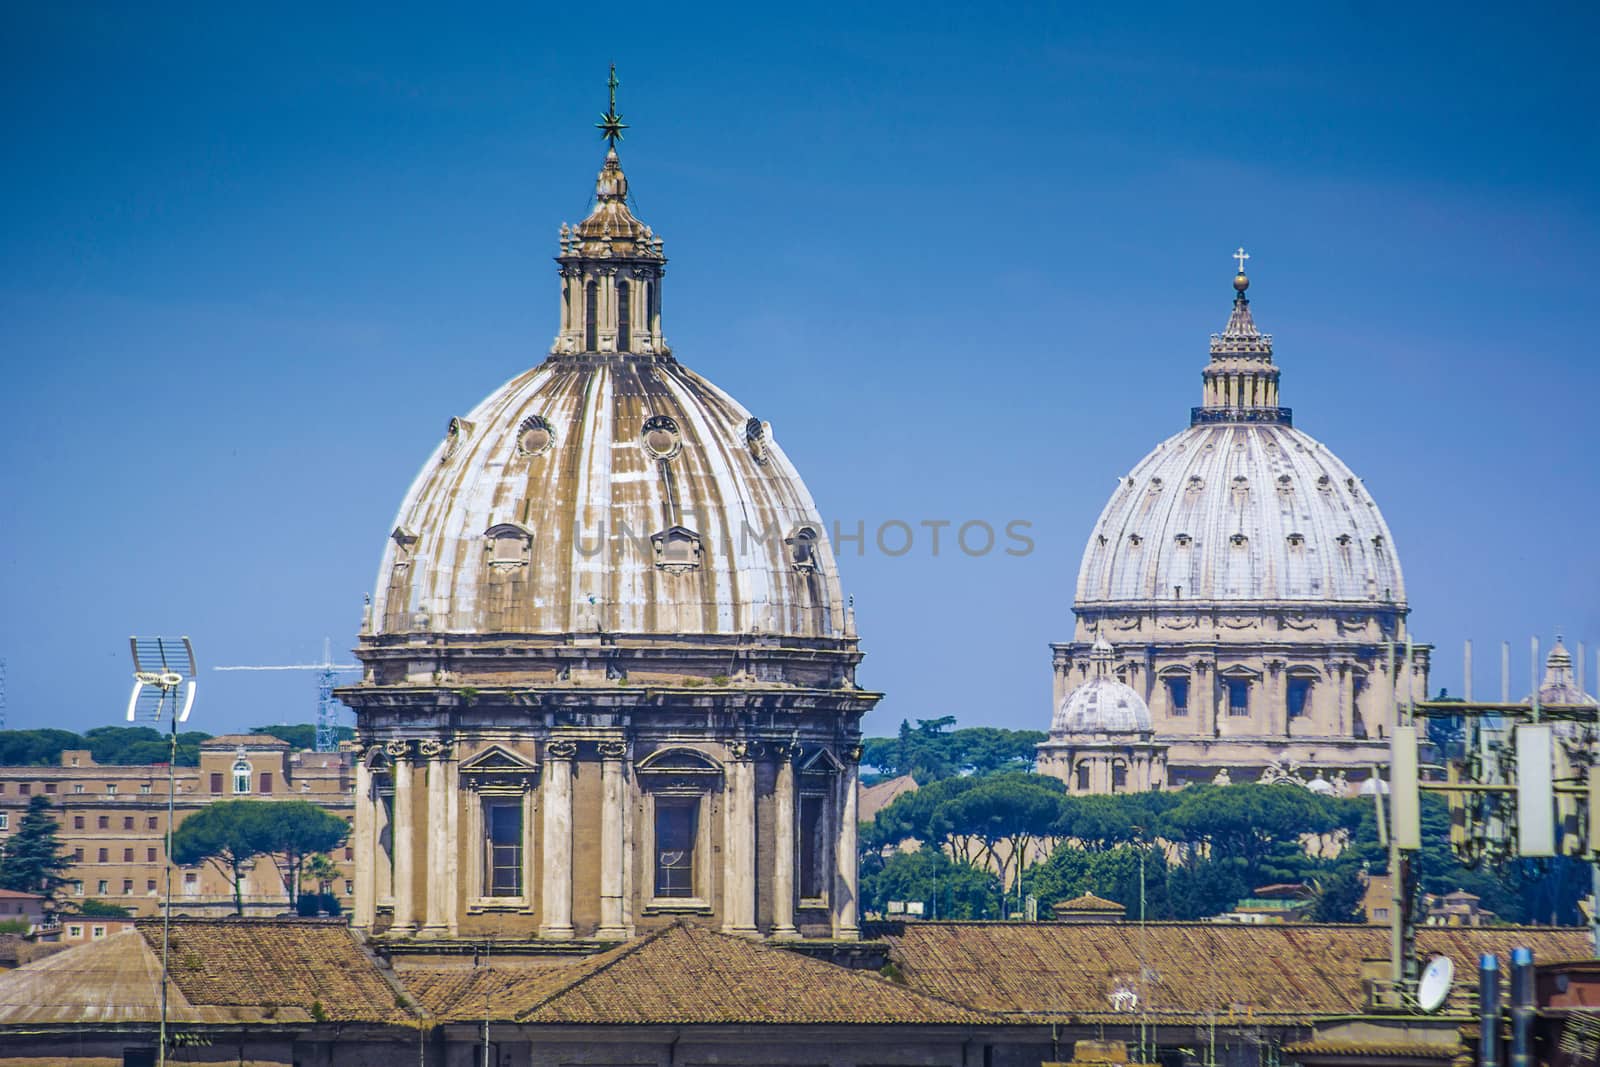 Rome skyline with domes by rarrarorro